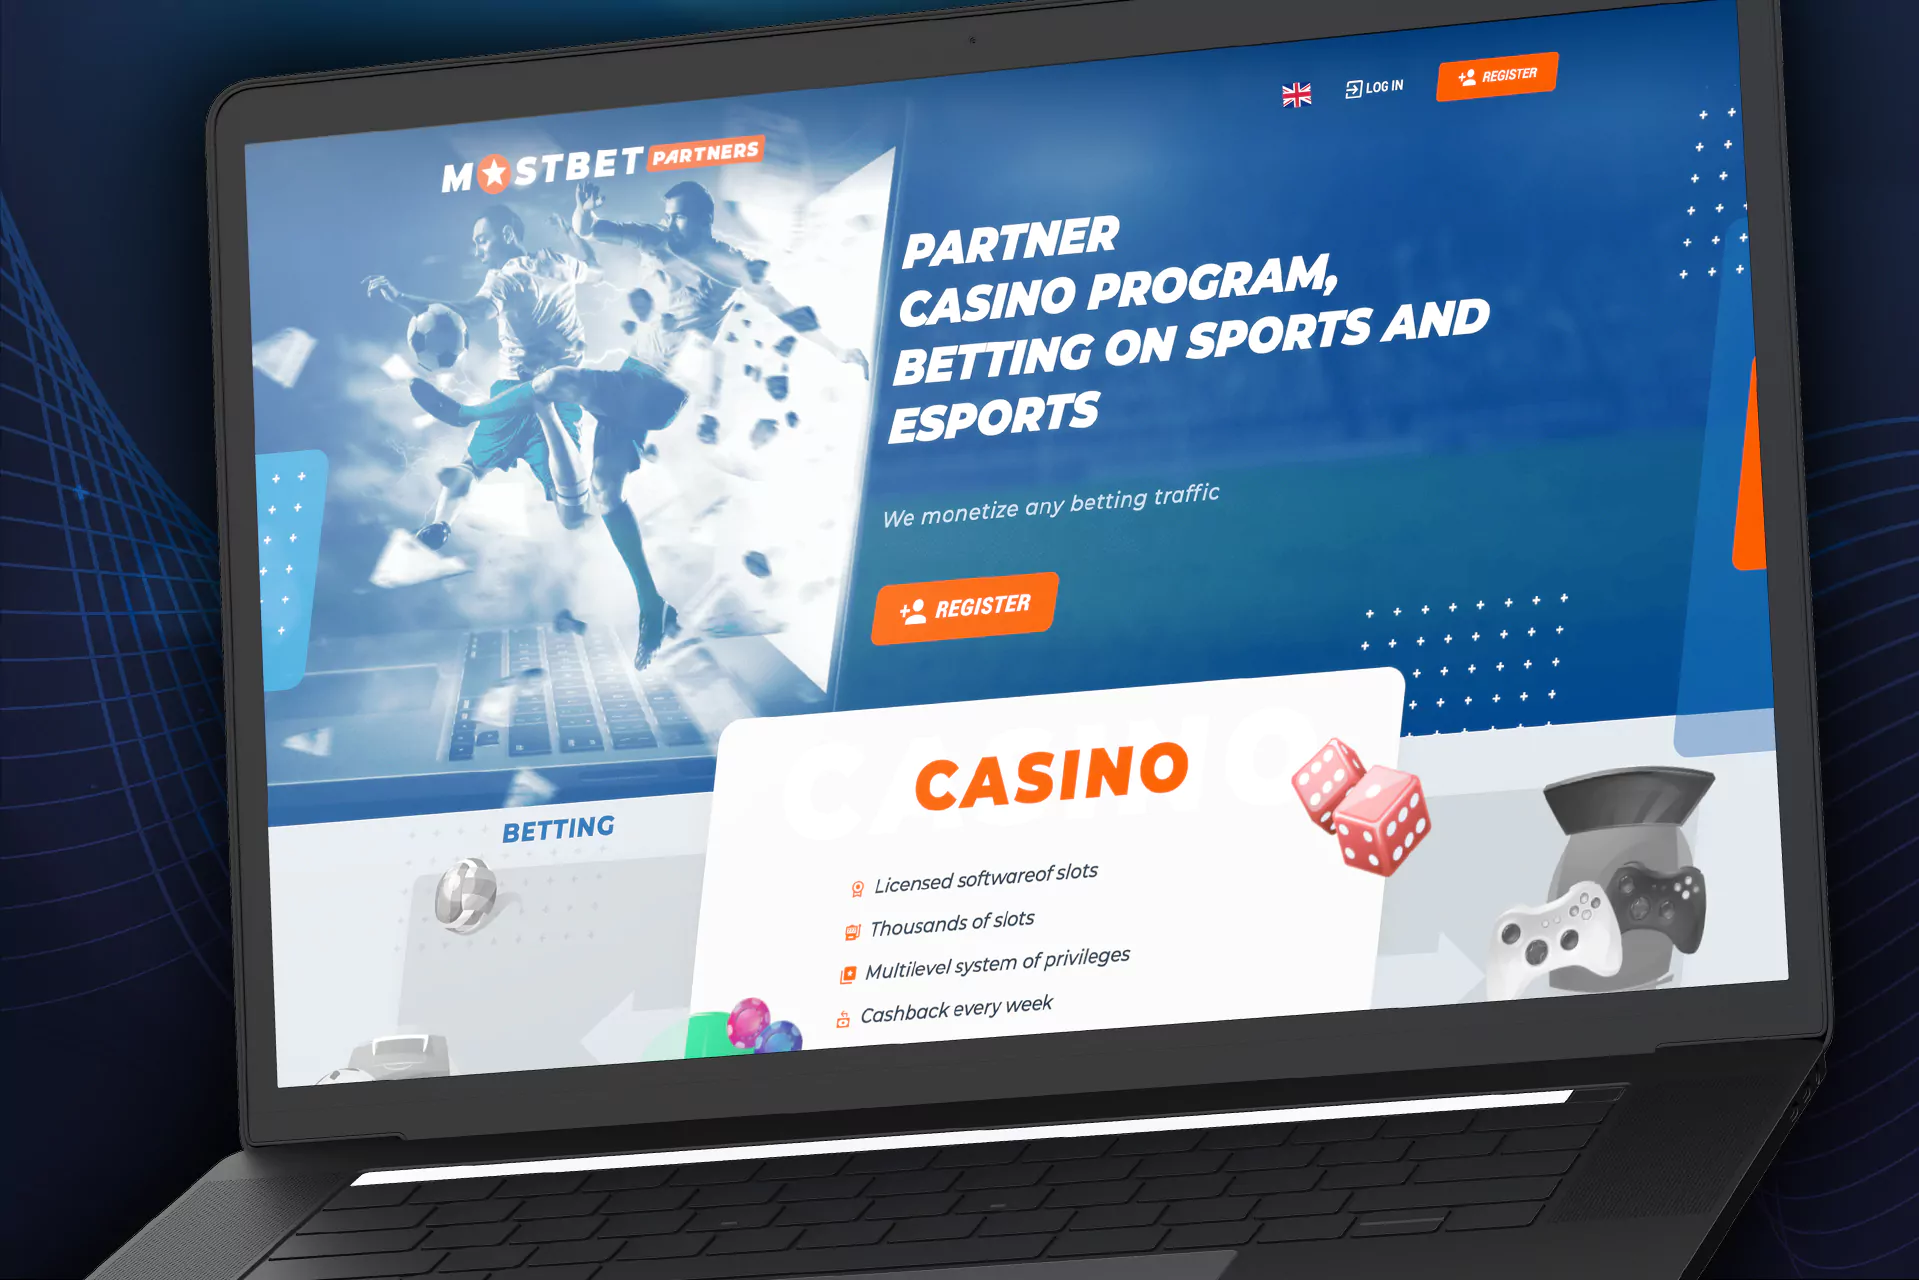 Partner casino program, betting on sports and esports.